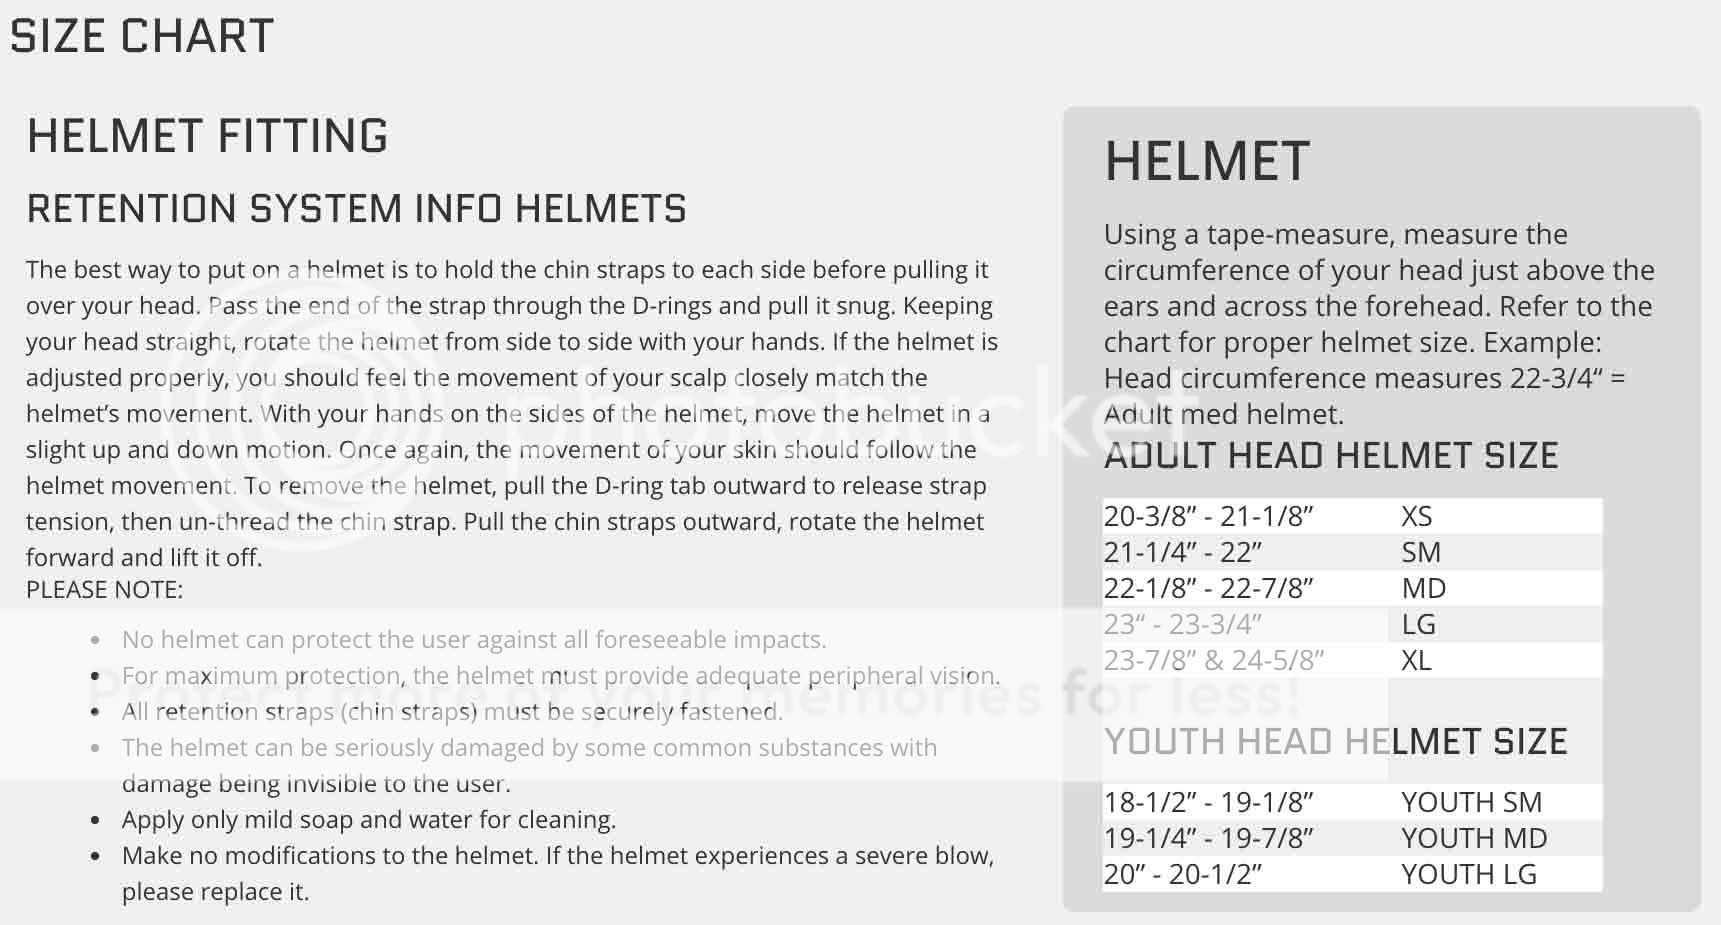 Msr Helmet Size Chart